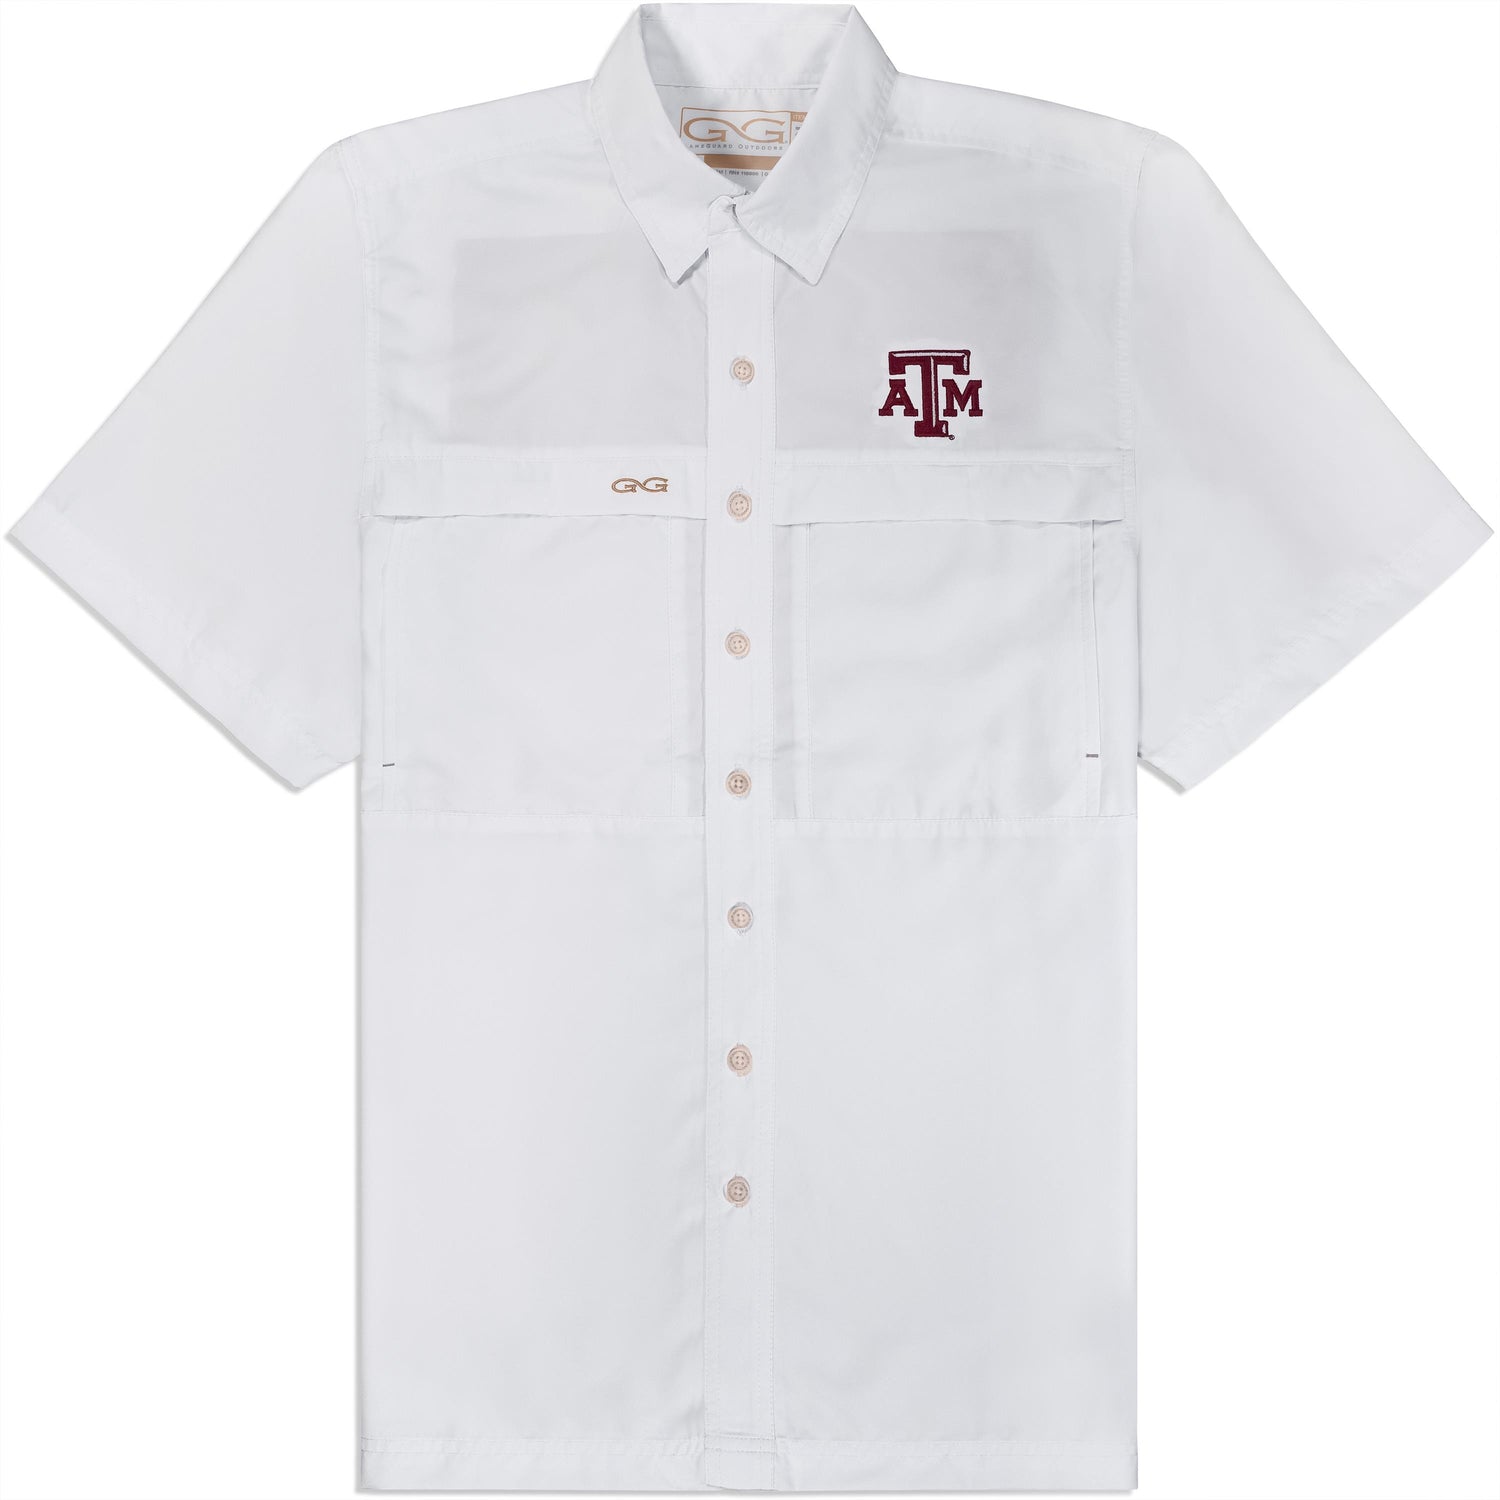 Texas A&M GameGuard Men's White MicroFiber Button Down Shirt